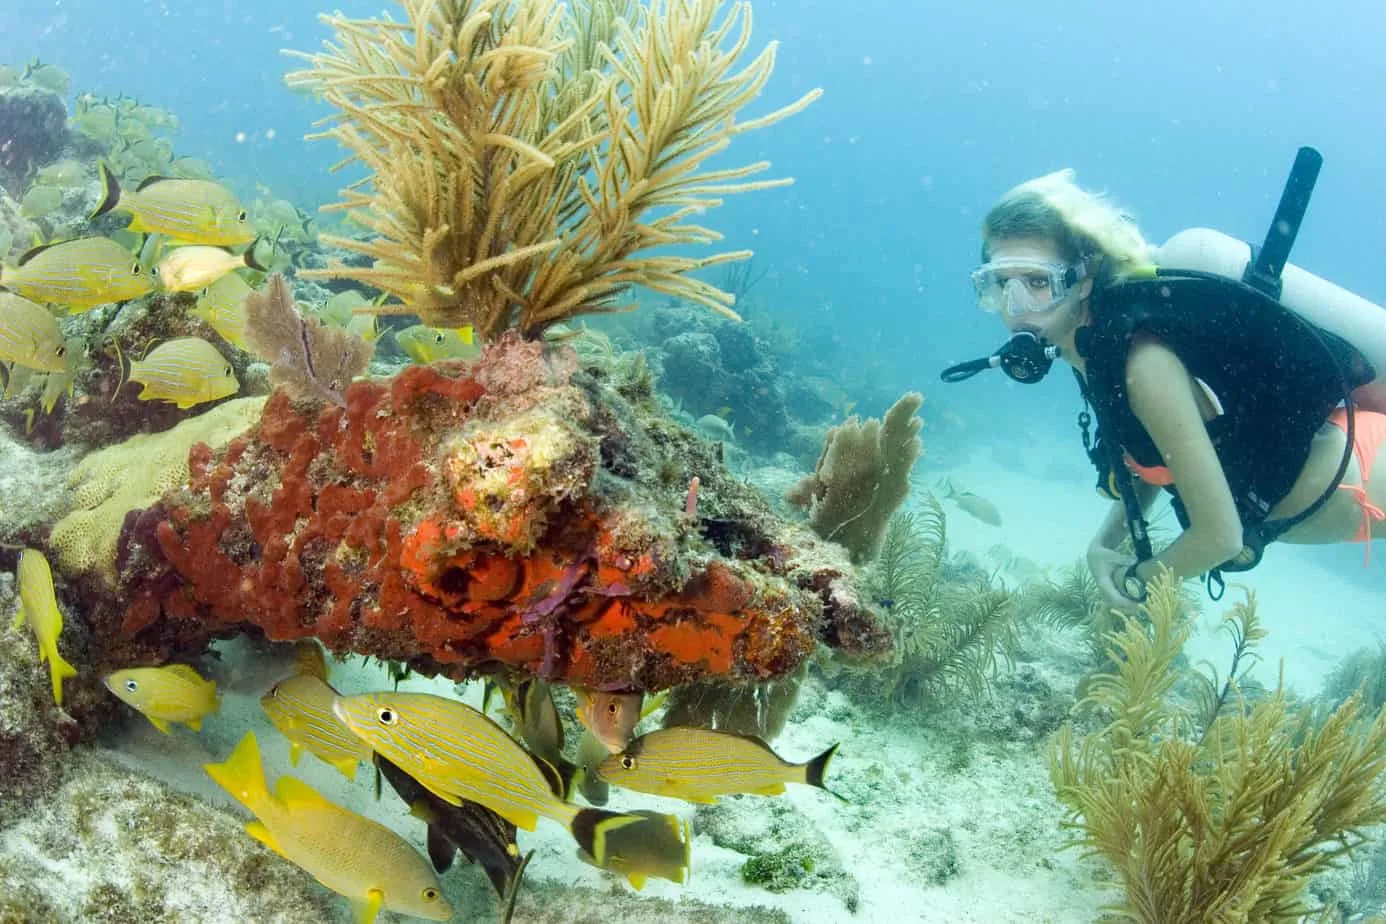 Diver explores coral reef